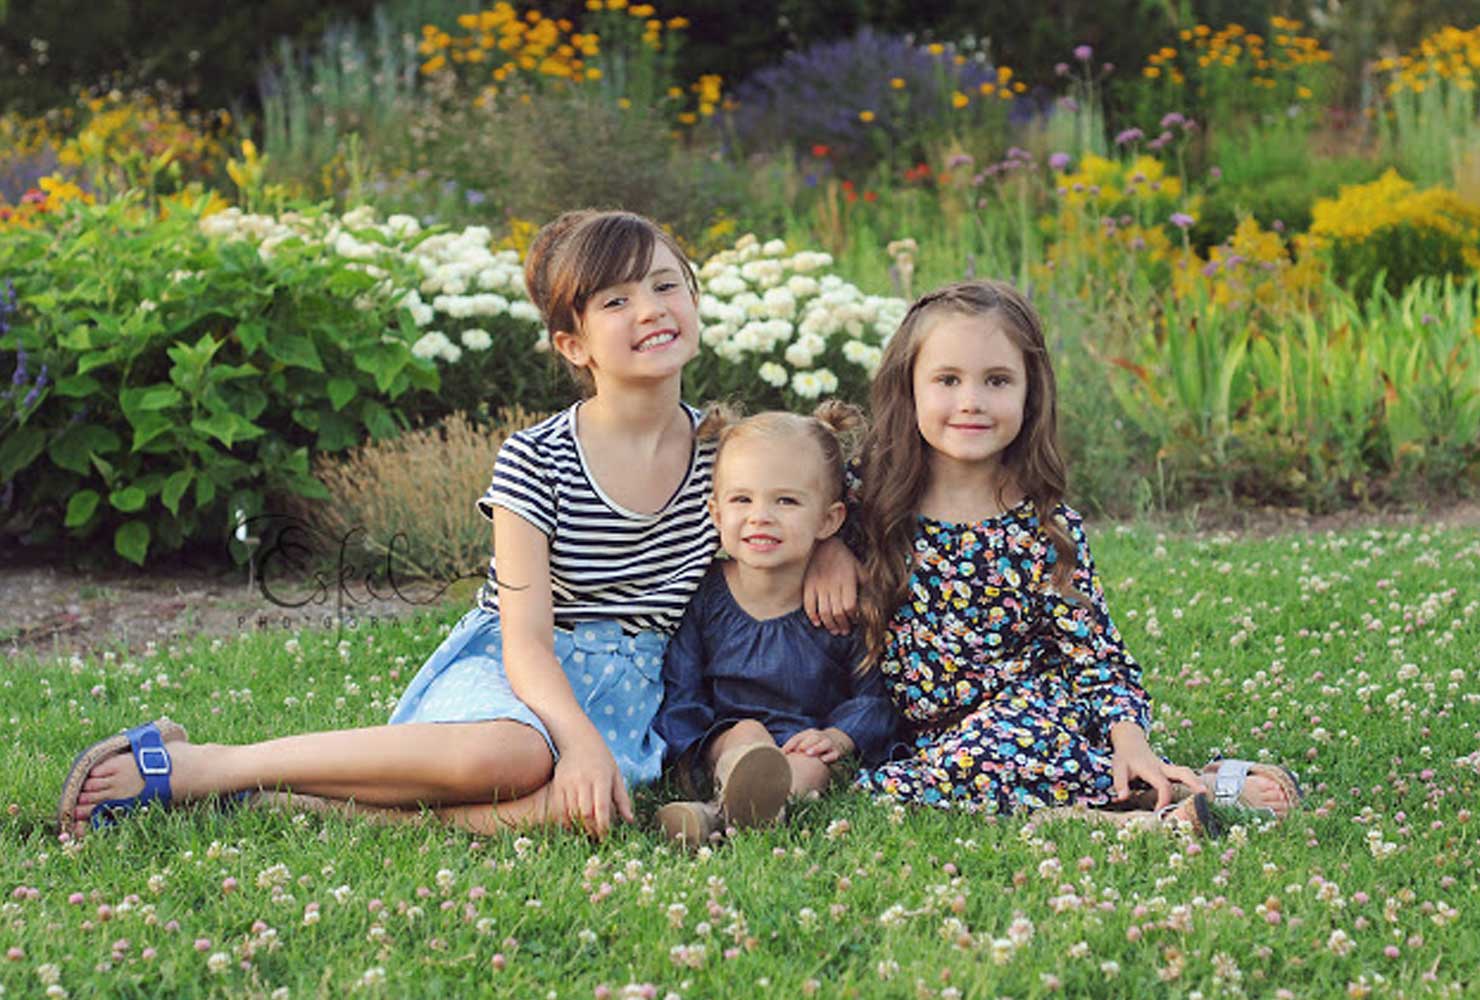 sibling photo ideas three children